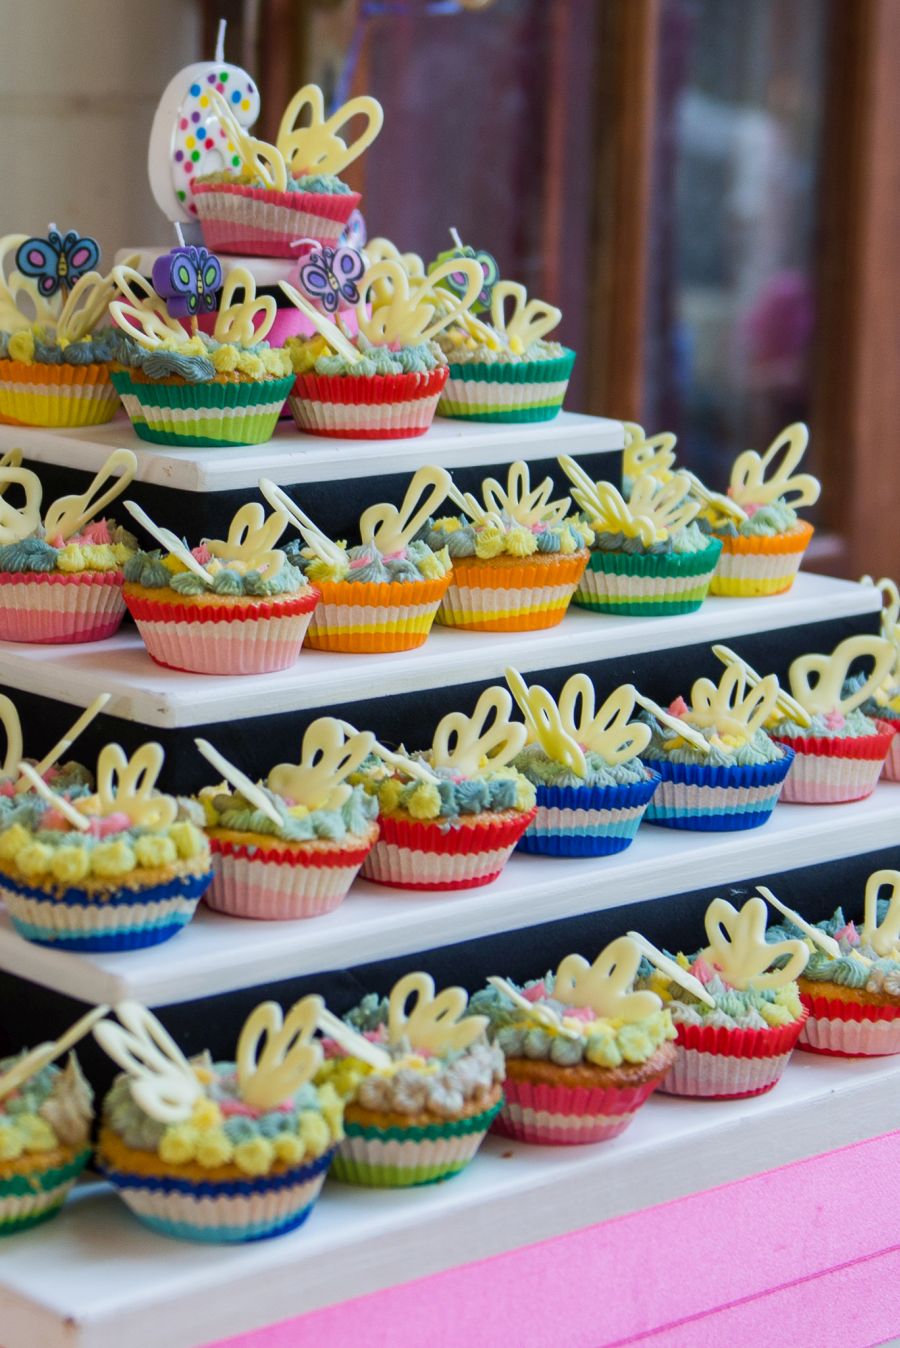 The rainbow butterfly birthday cupcakes